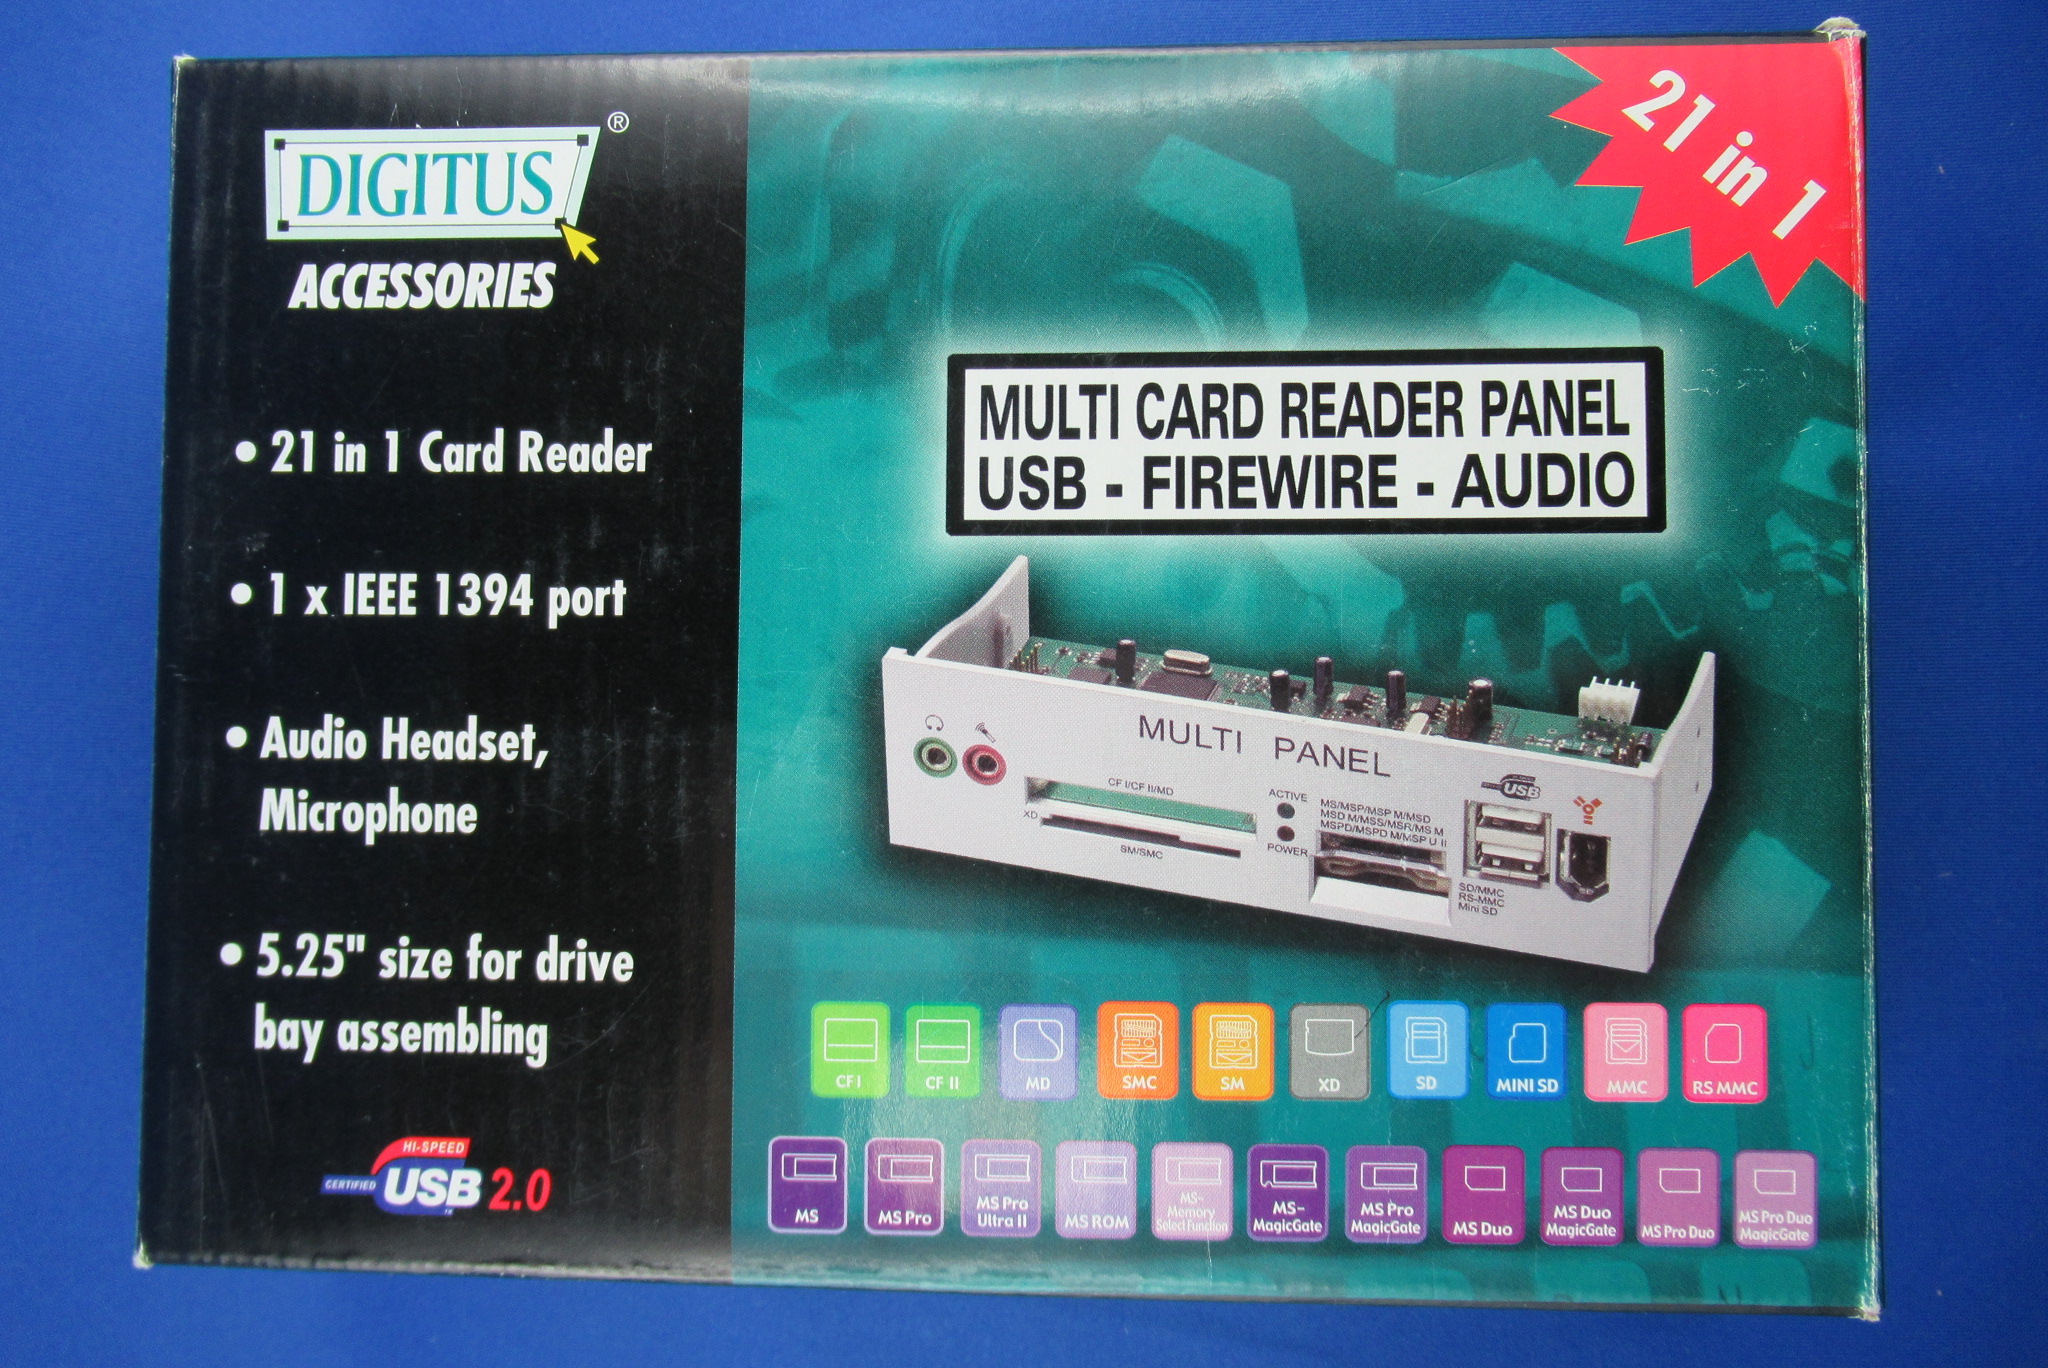 5,25"-Multimedia Panel 21-in-1/Firewire/Audio silber DIGITUS DA-70138S